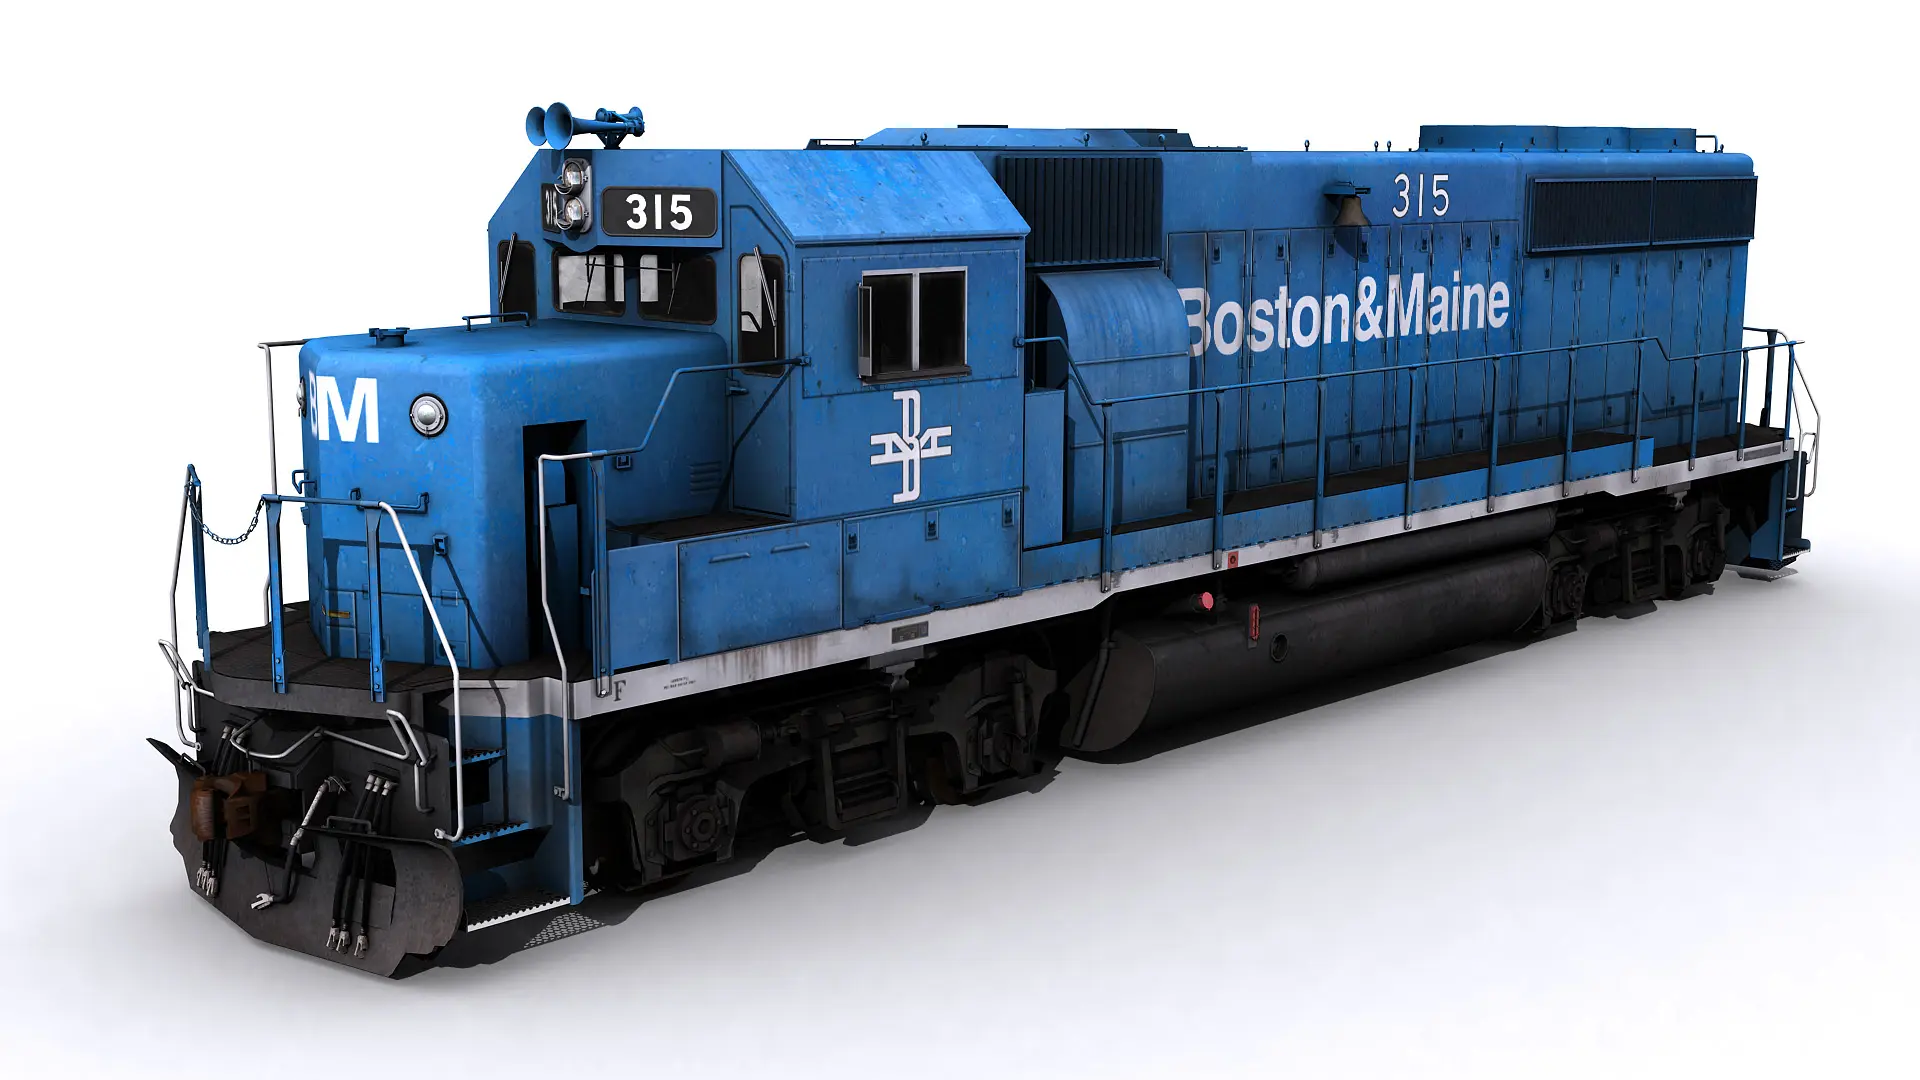 Boston and maine a blue rail engine